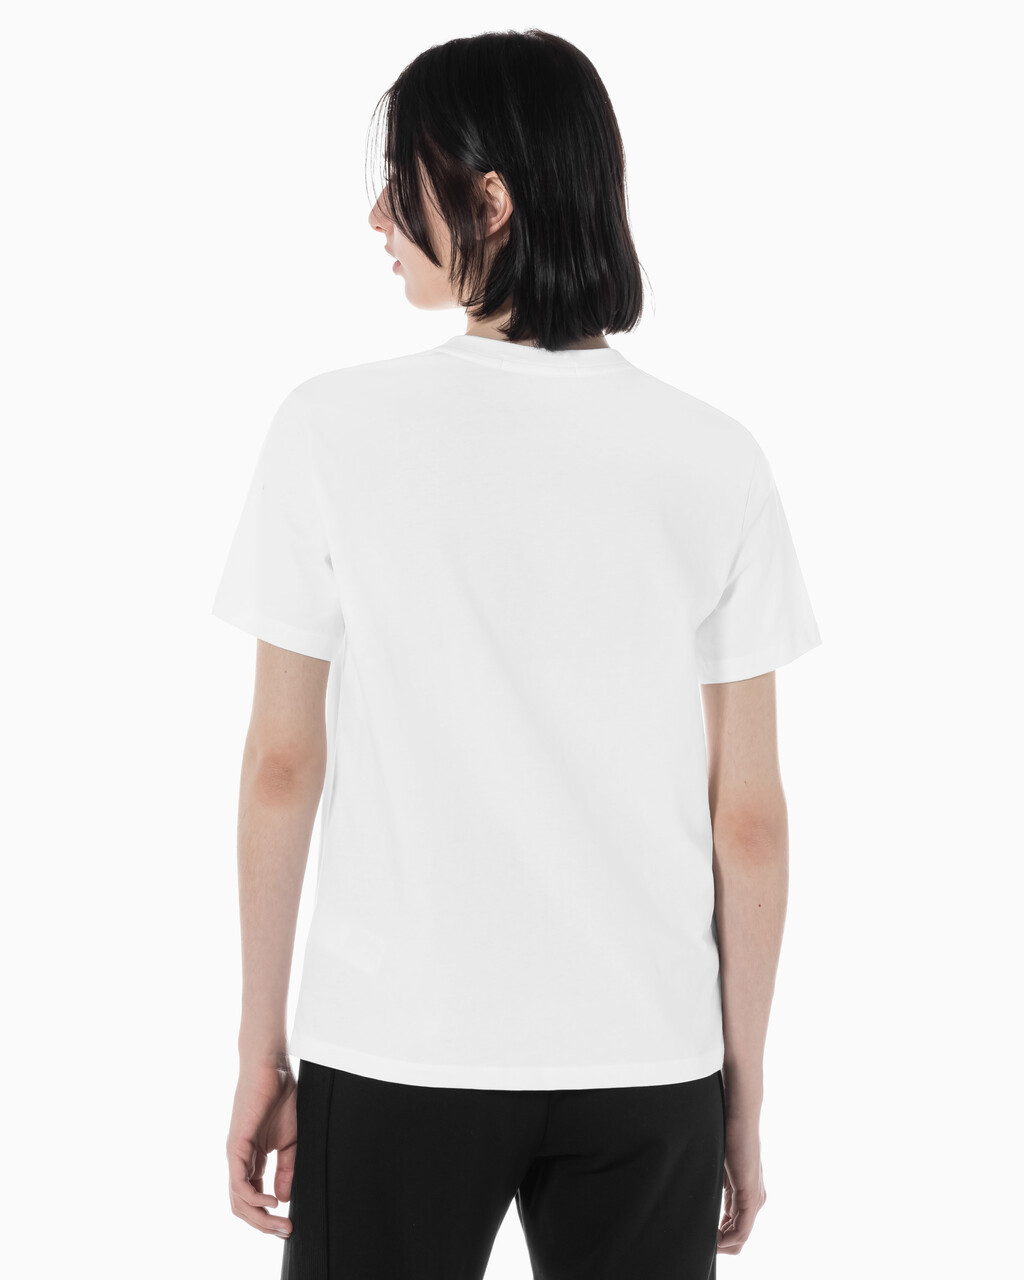 Buy 여성 스트레이트핏 모노그램로고 크루넥 반팔 티셔츠 in color BRIGHT WHITE